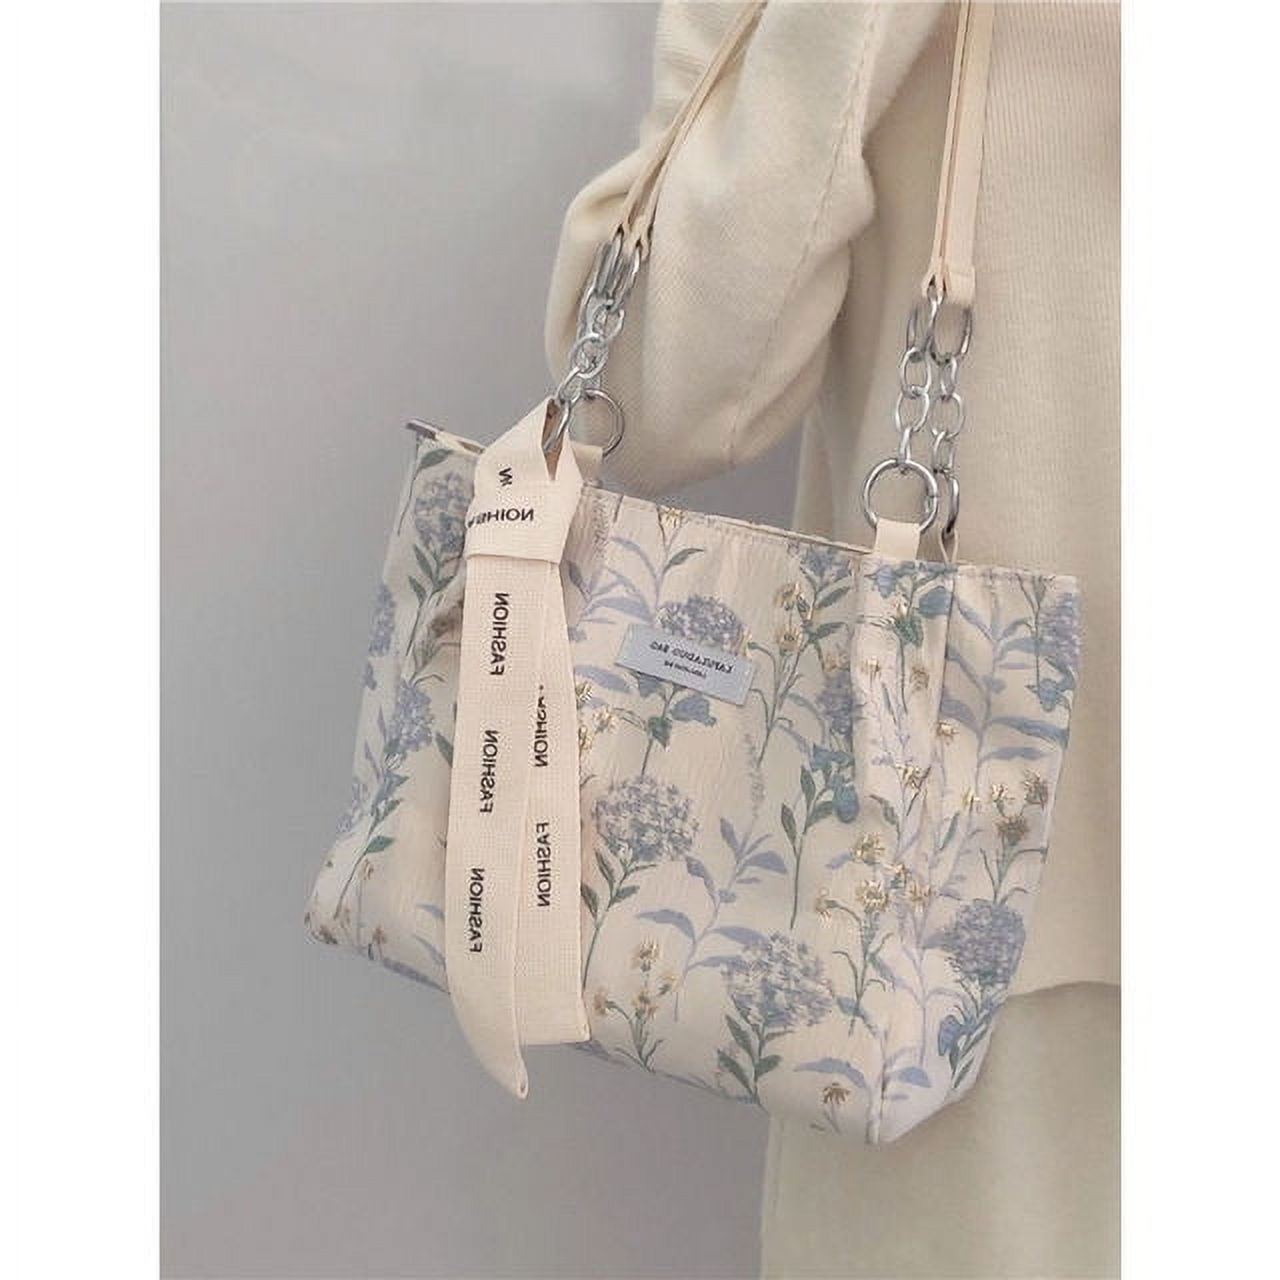 CoCopeaunt Small Luxury Designer Handbag Embroidery Thread Womens